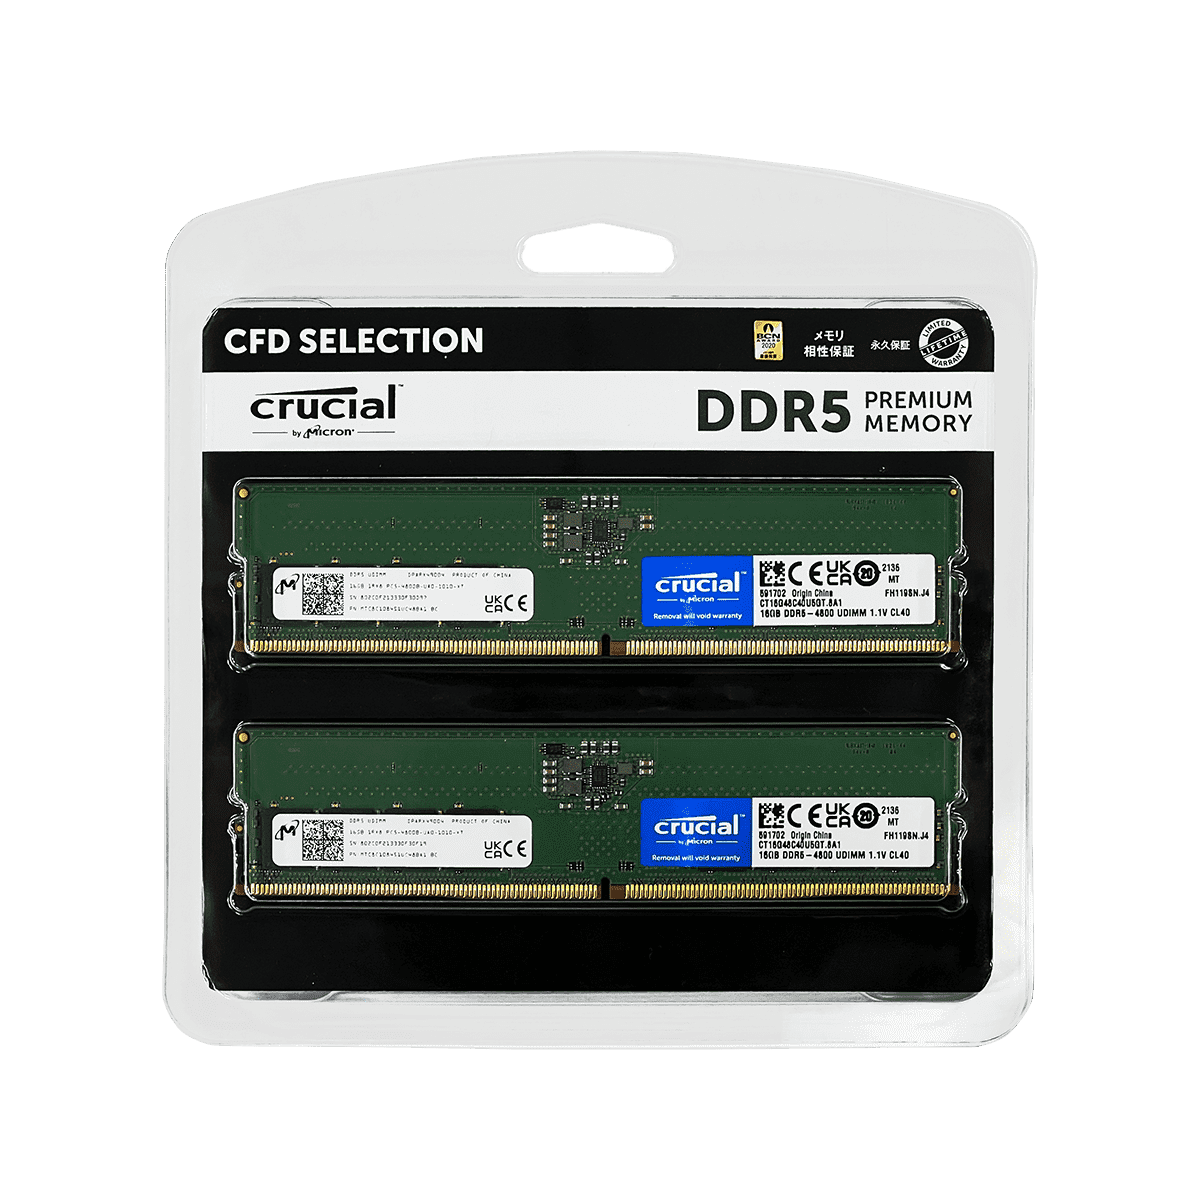 CFD Selection メモリ スタンダードシリーズ DDR5-4800 デスクトップ用 2枚組(16GB x2) W5U4800CM-16GS